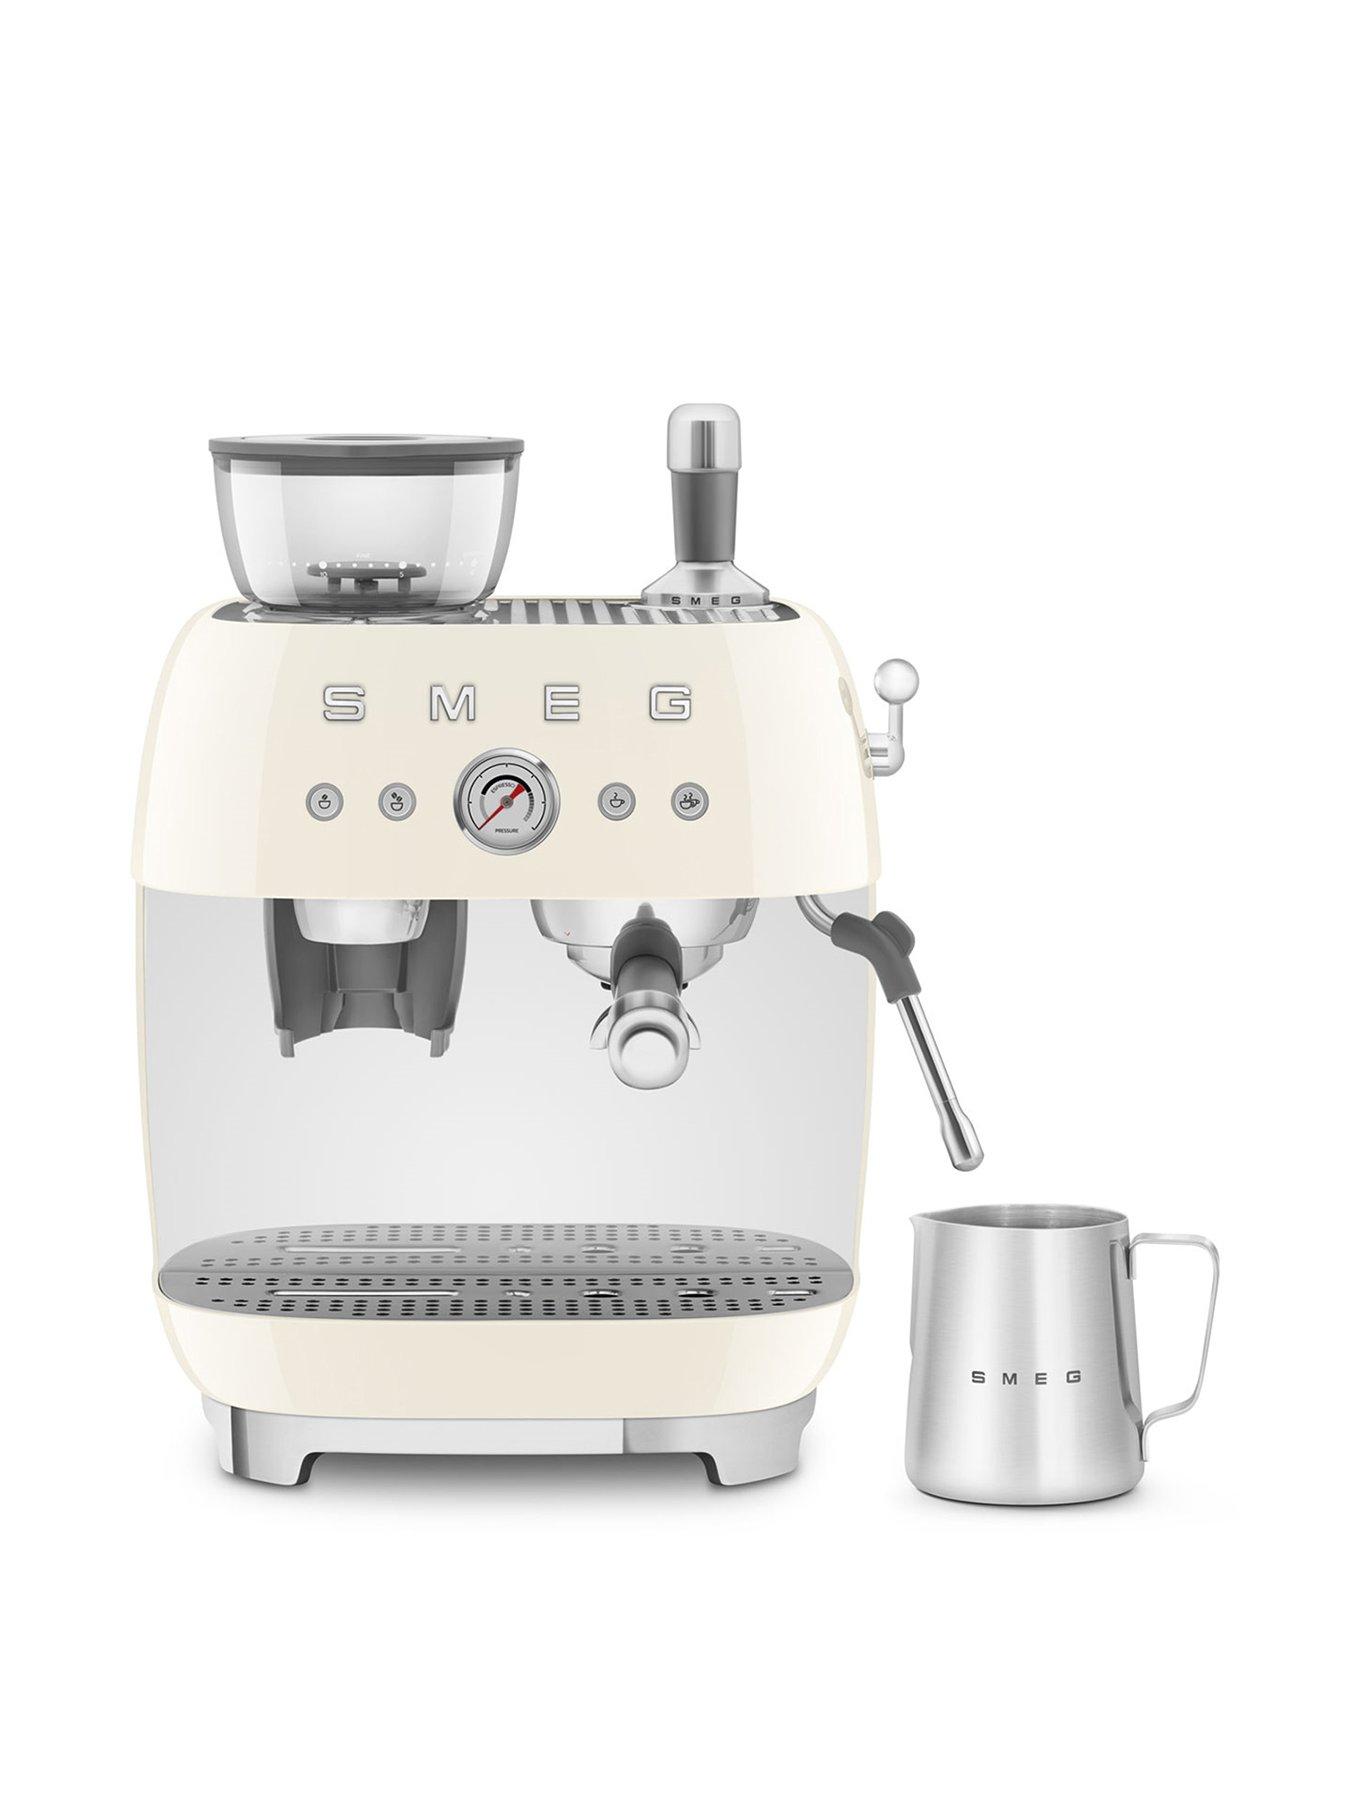 Smeg Egf03 Retro Style Espresso Coffee Machine With Grinder, 2.4L, 1650W - Cream